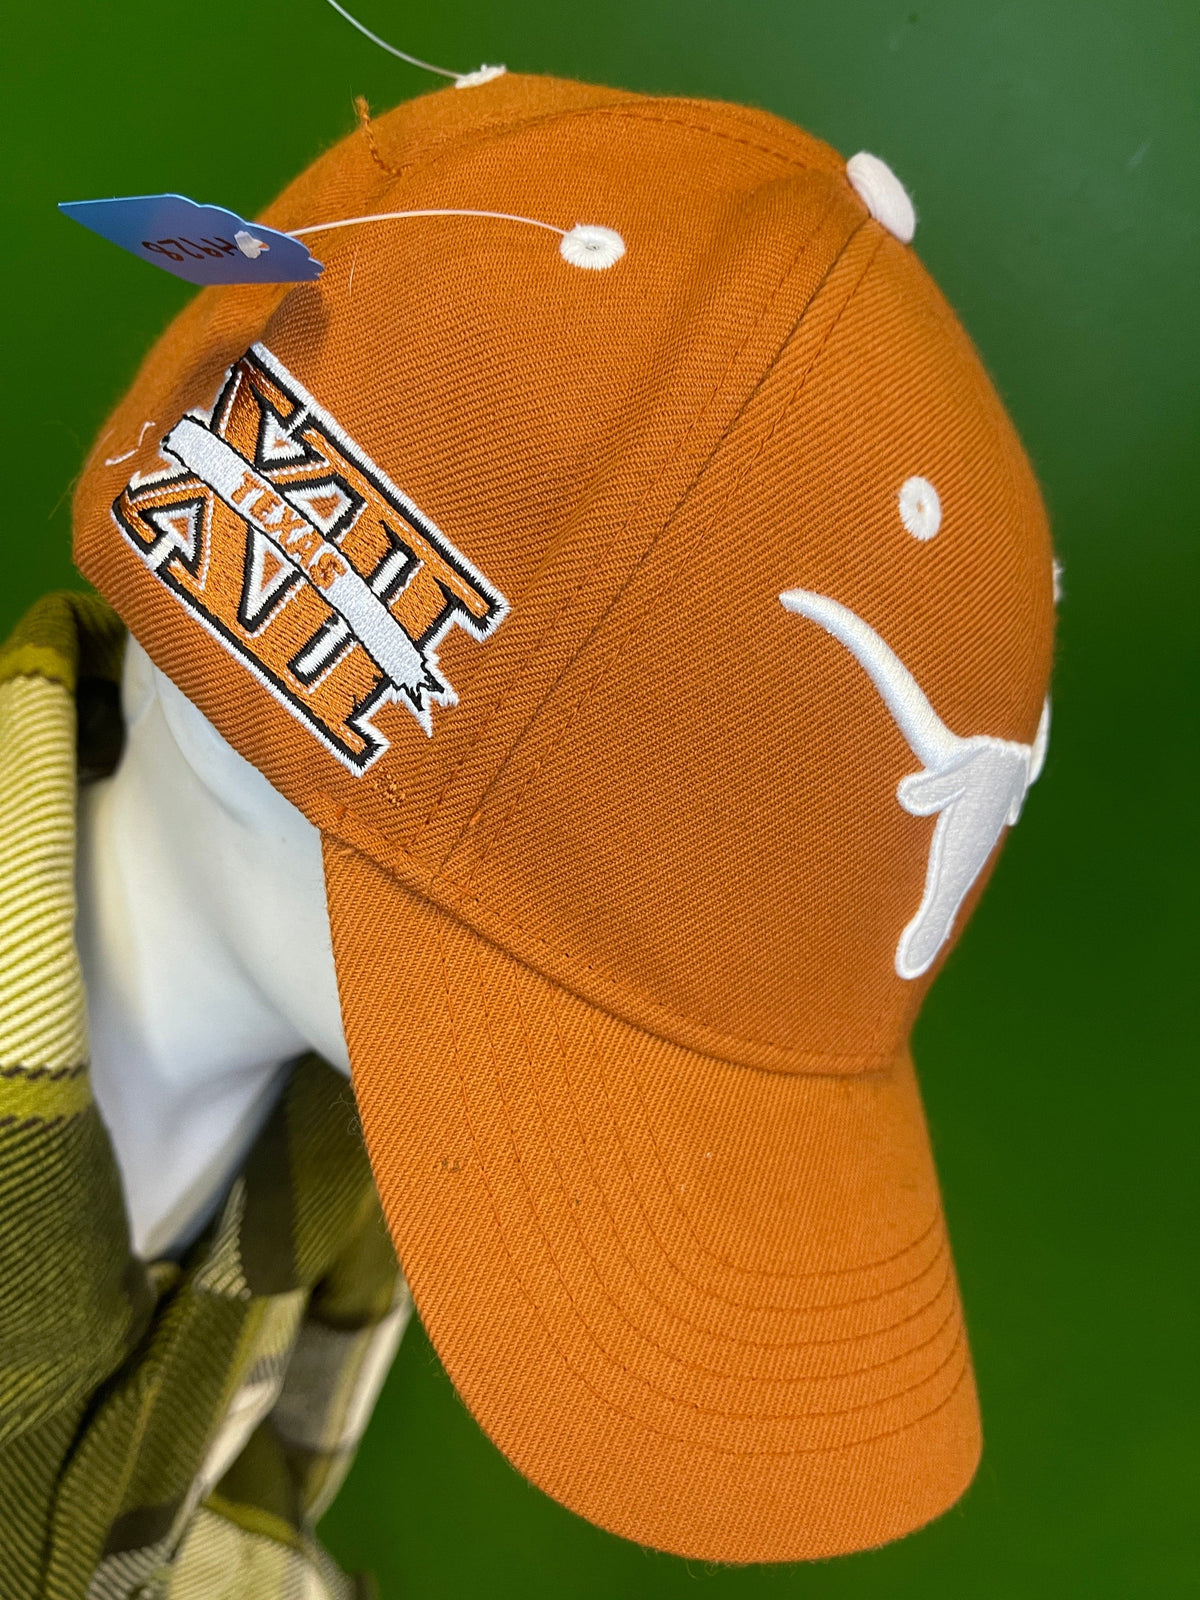 NCAA Texas Longhorns "XIII" Strapback Hat/Cap OSFM